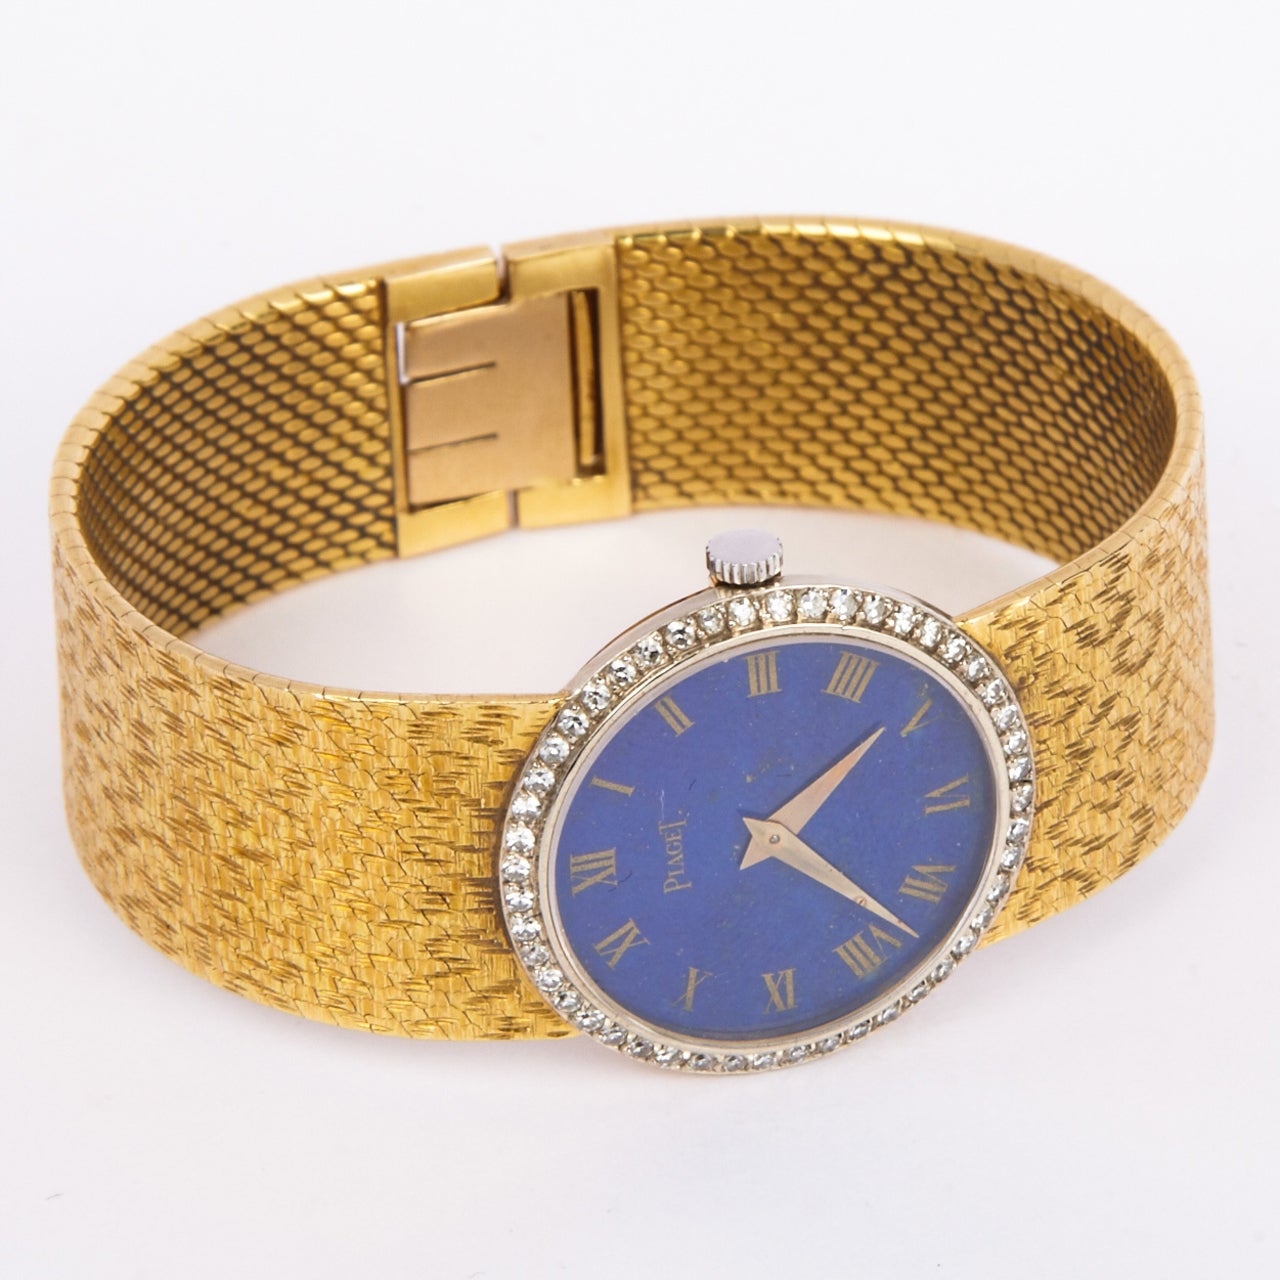 Women's Piaget Lady's Yellow Gold, Diamond and Lapis Bracelet Watch